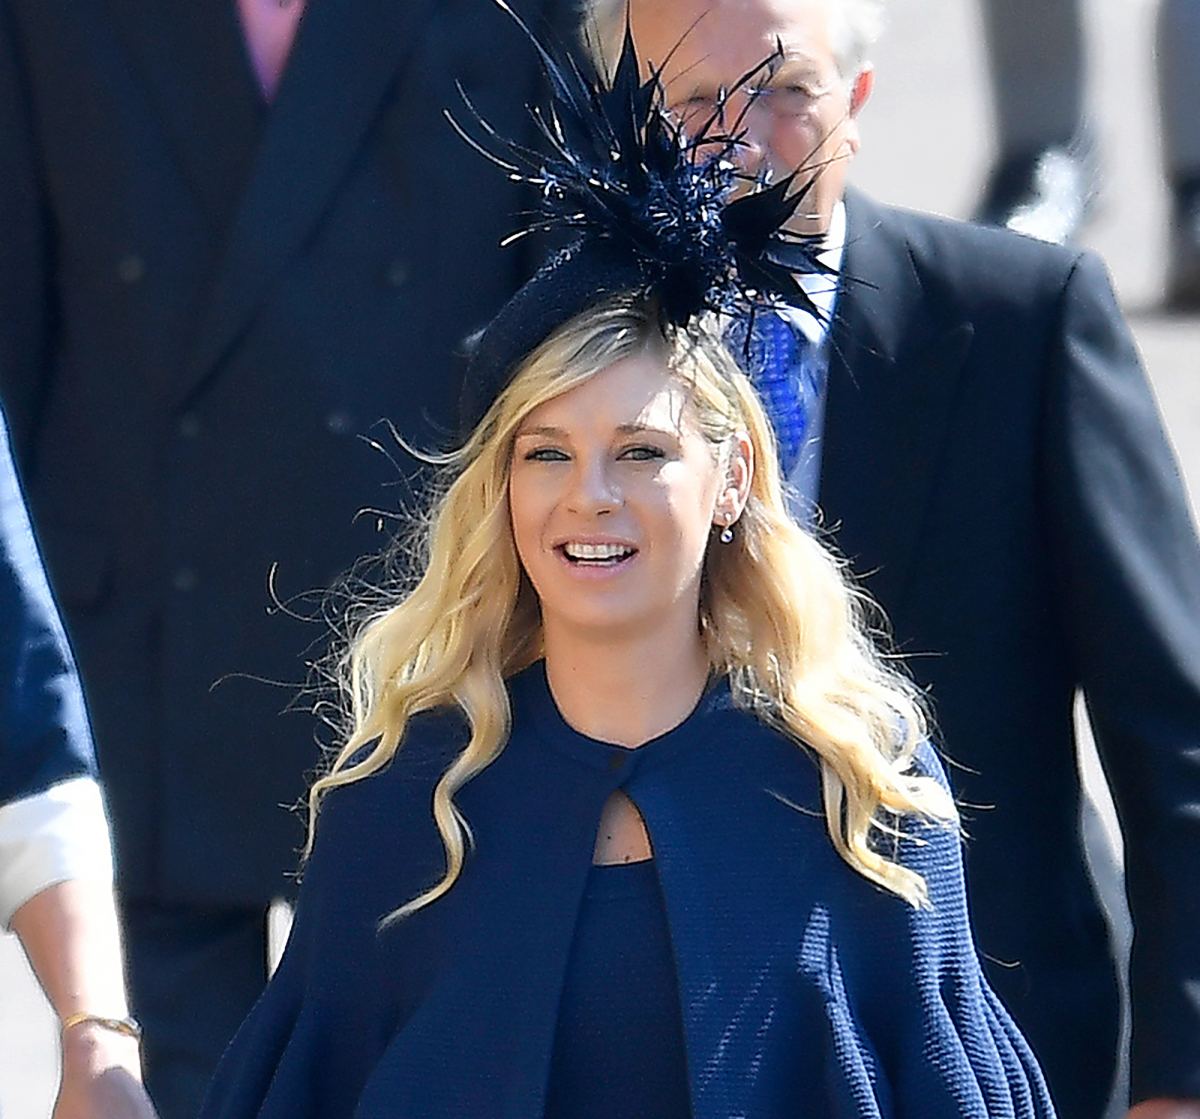 Fascinators, hats rule royal wedding 2018 fashion - ABC11 Raleigh